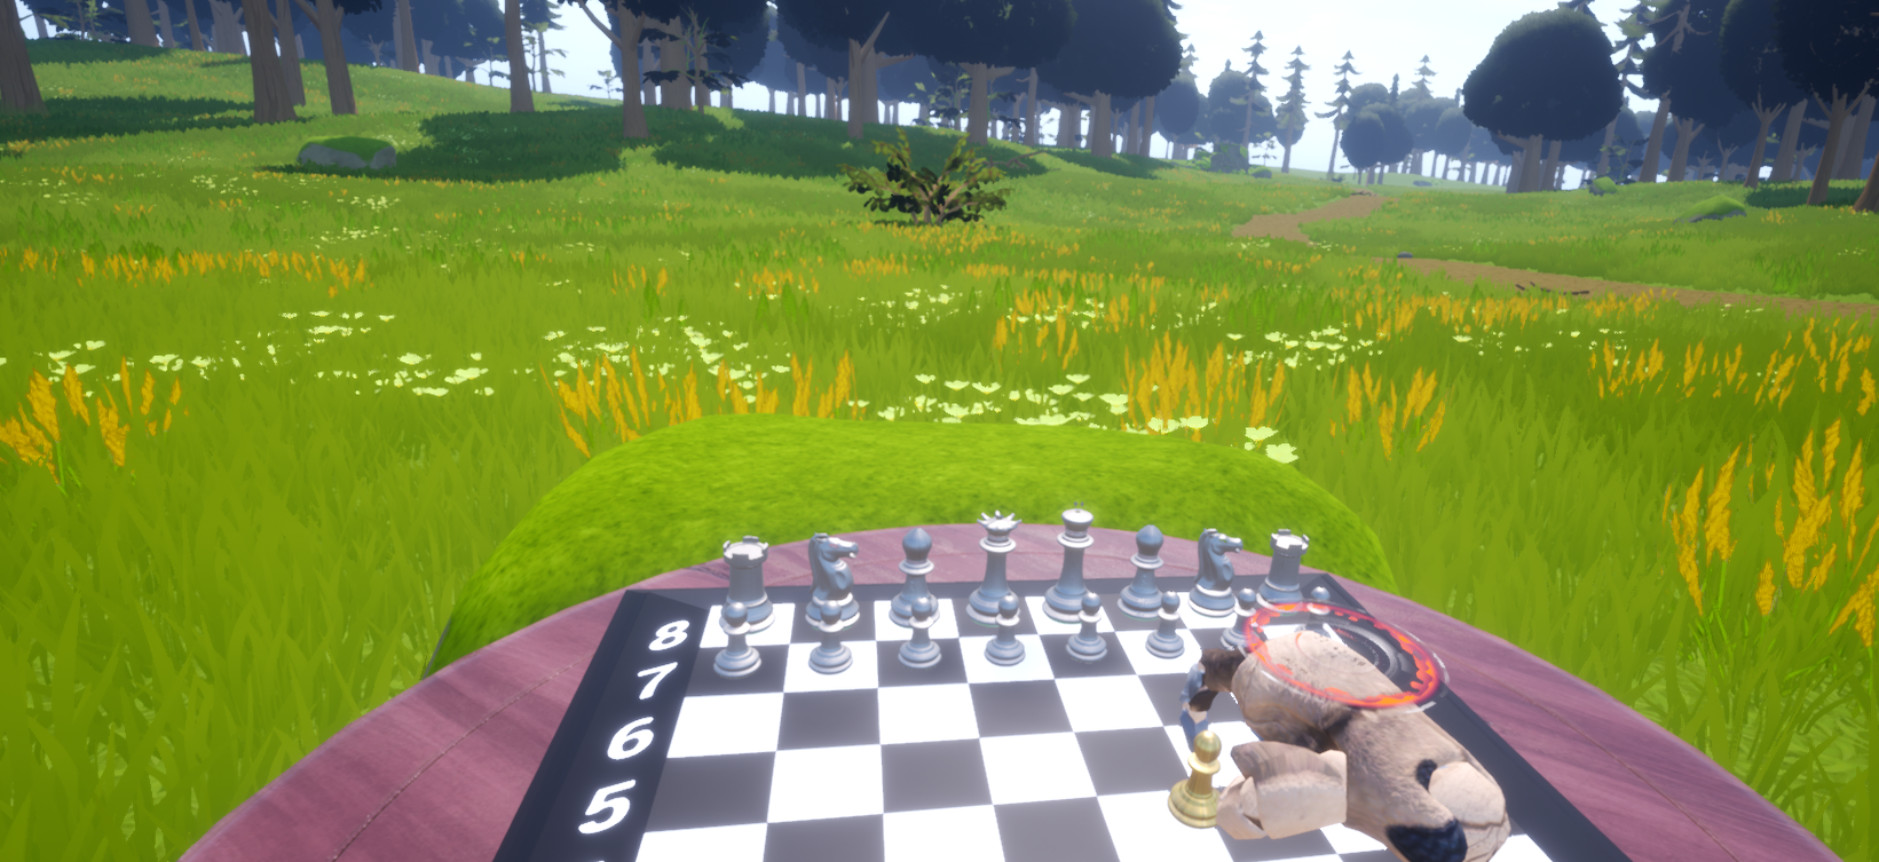 Chessality on Steam